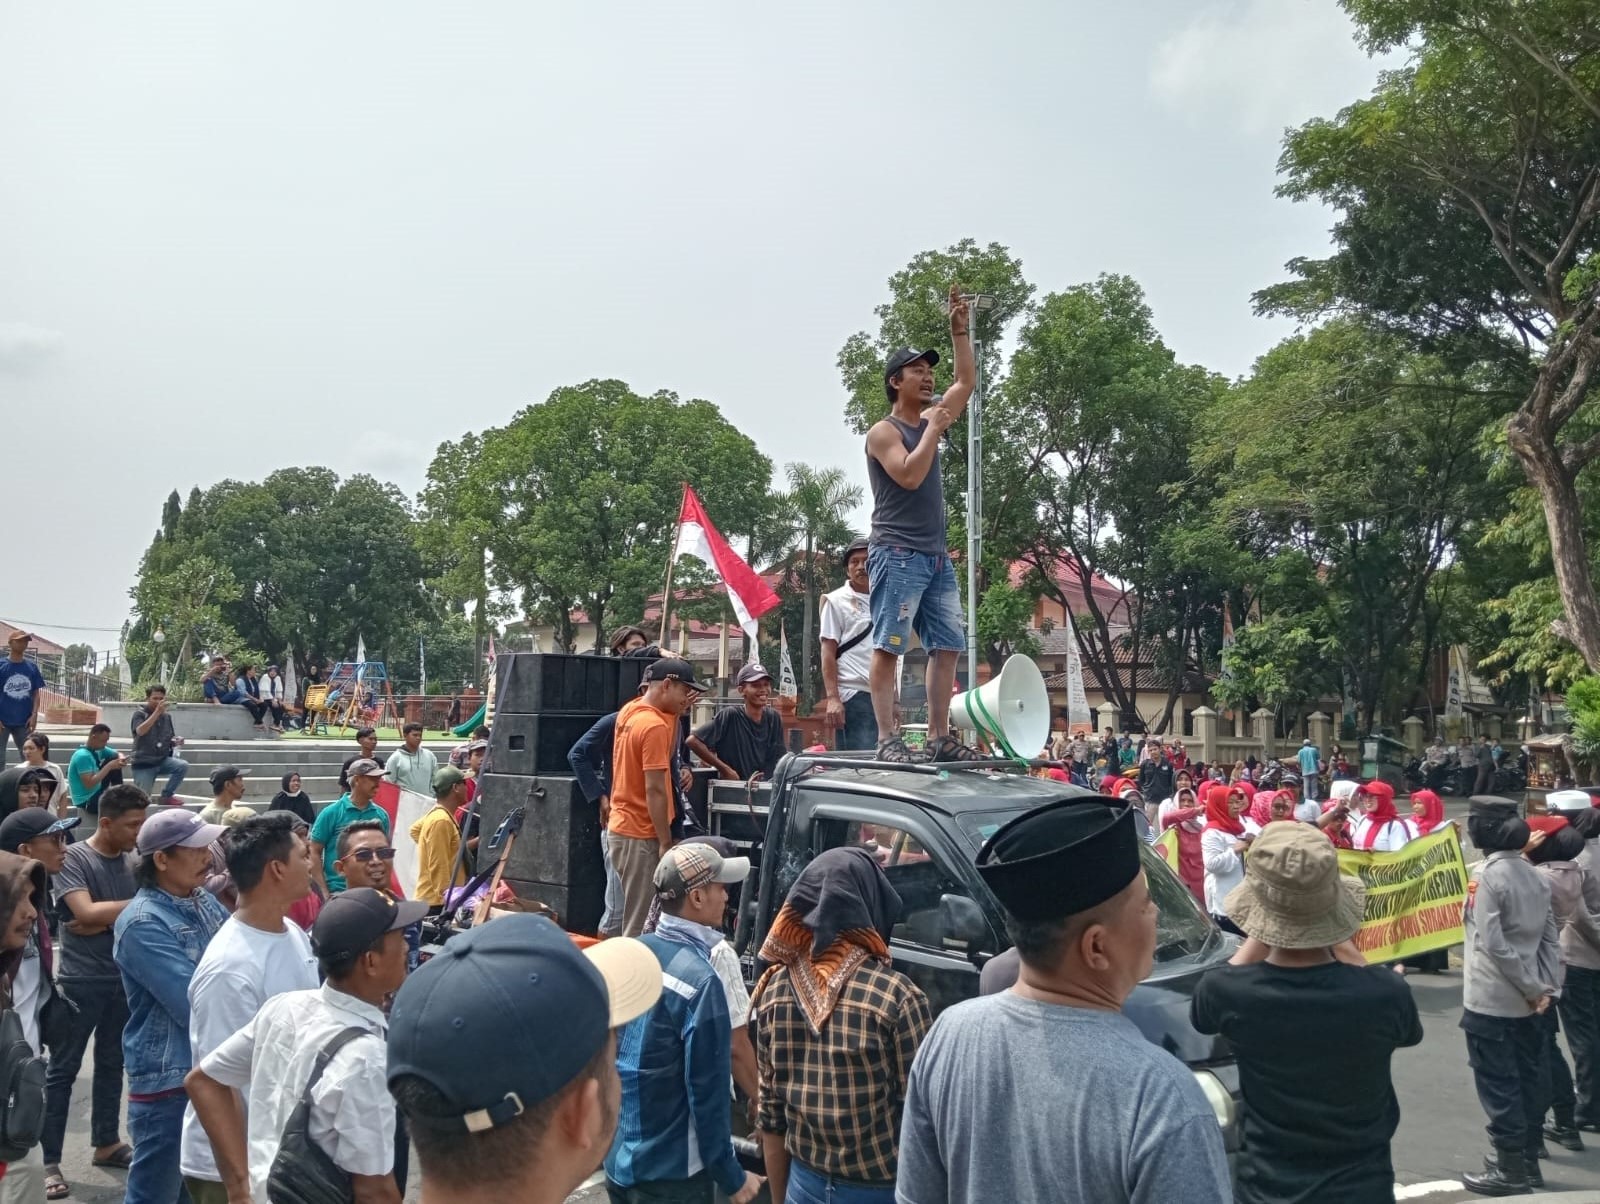 Demo Jilid 4, Warga Surakarta Datangi Kantor Bupati 